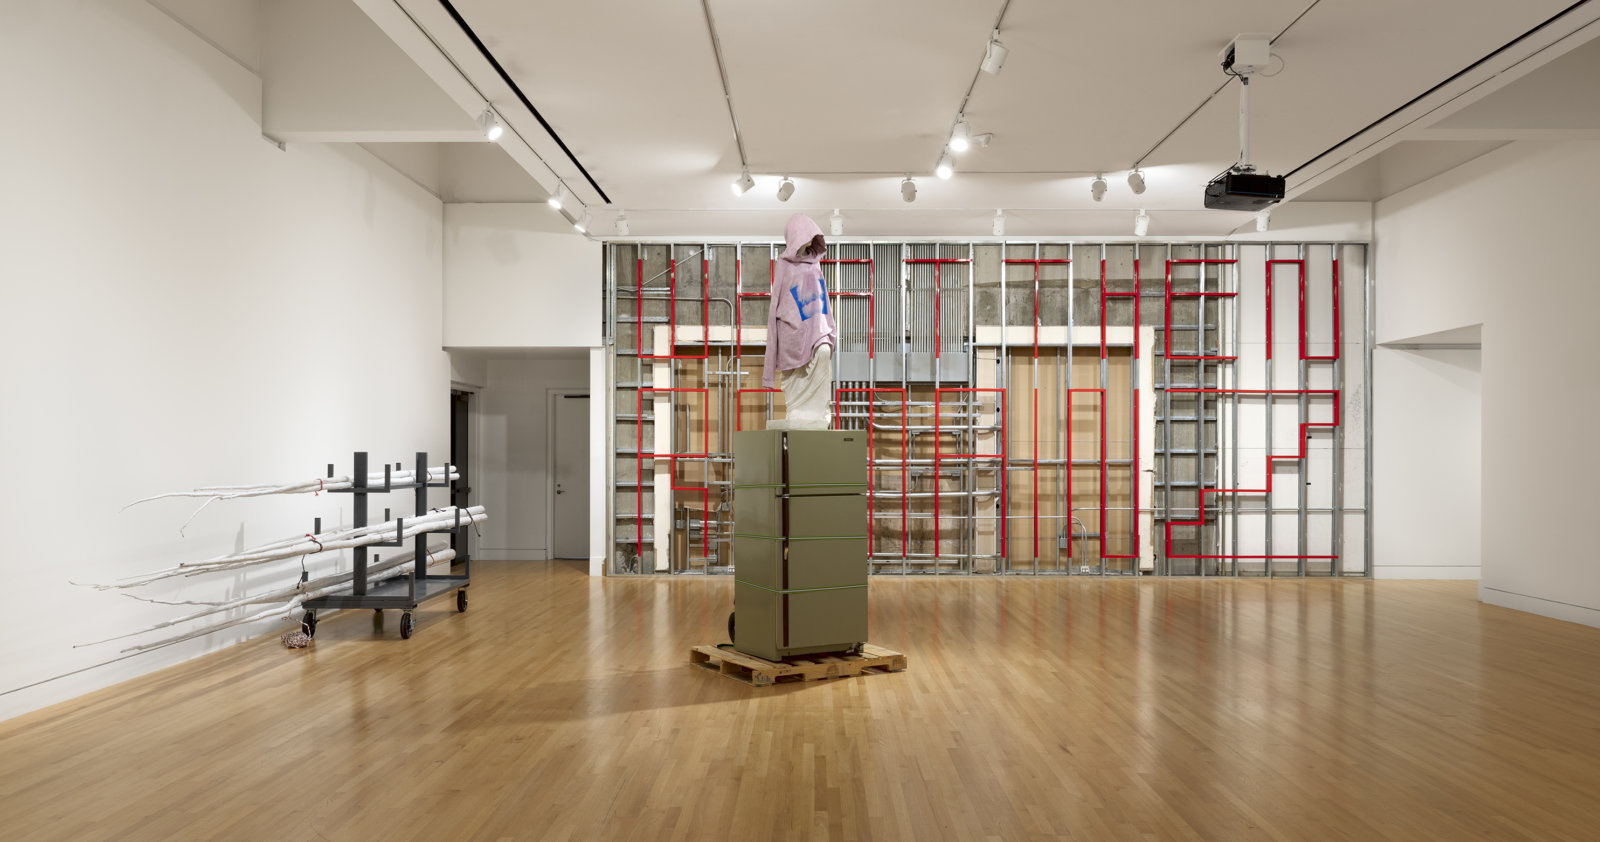 Duane Linklater, installation view, mymothersside, Frye Art Museum, Seattle, 2021